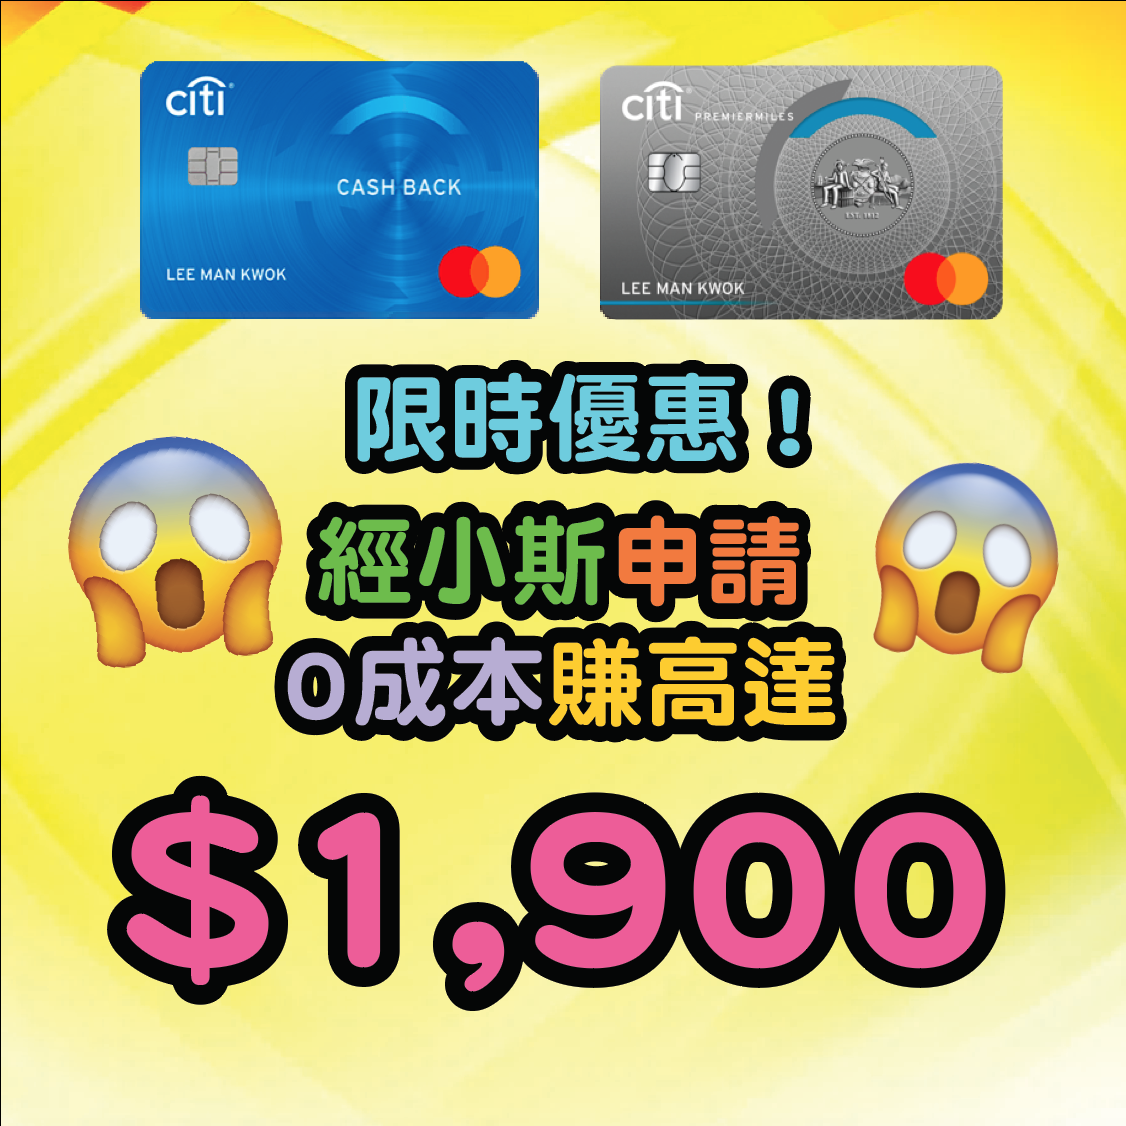 citi-cash-back-mastercard-0-1-500-400